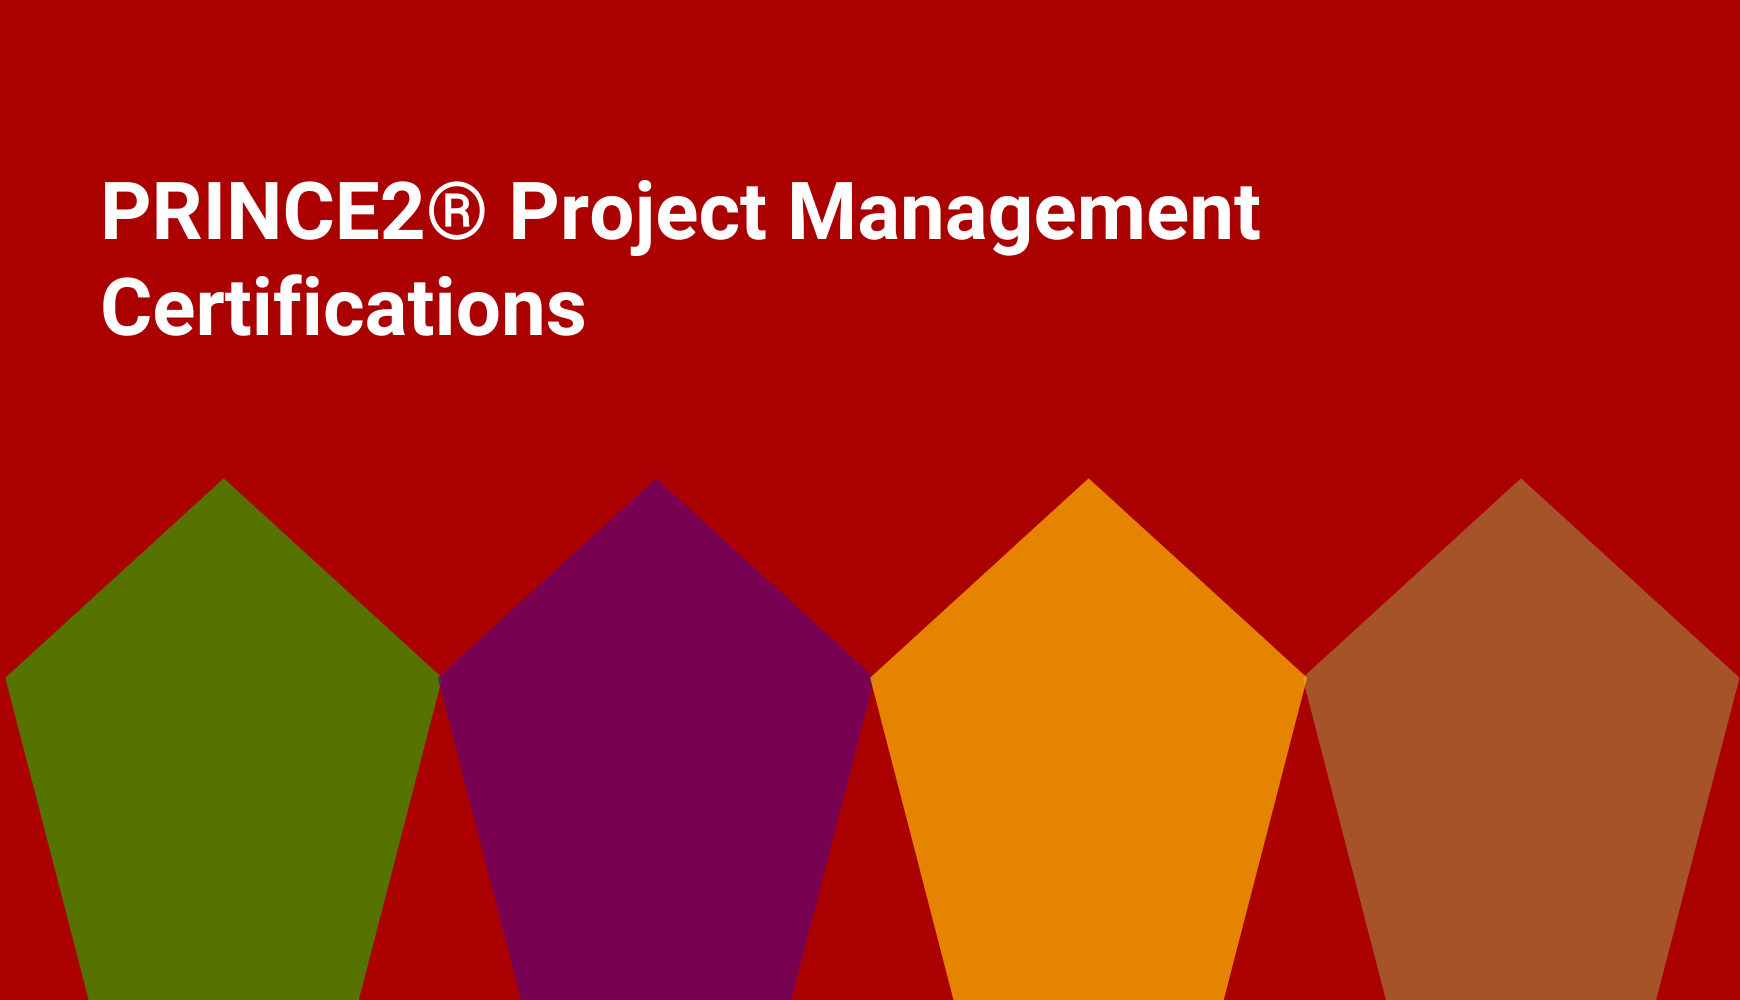 Project Management Certifications